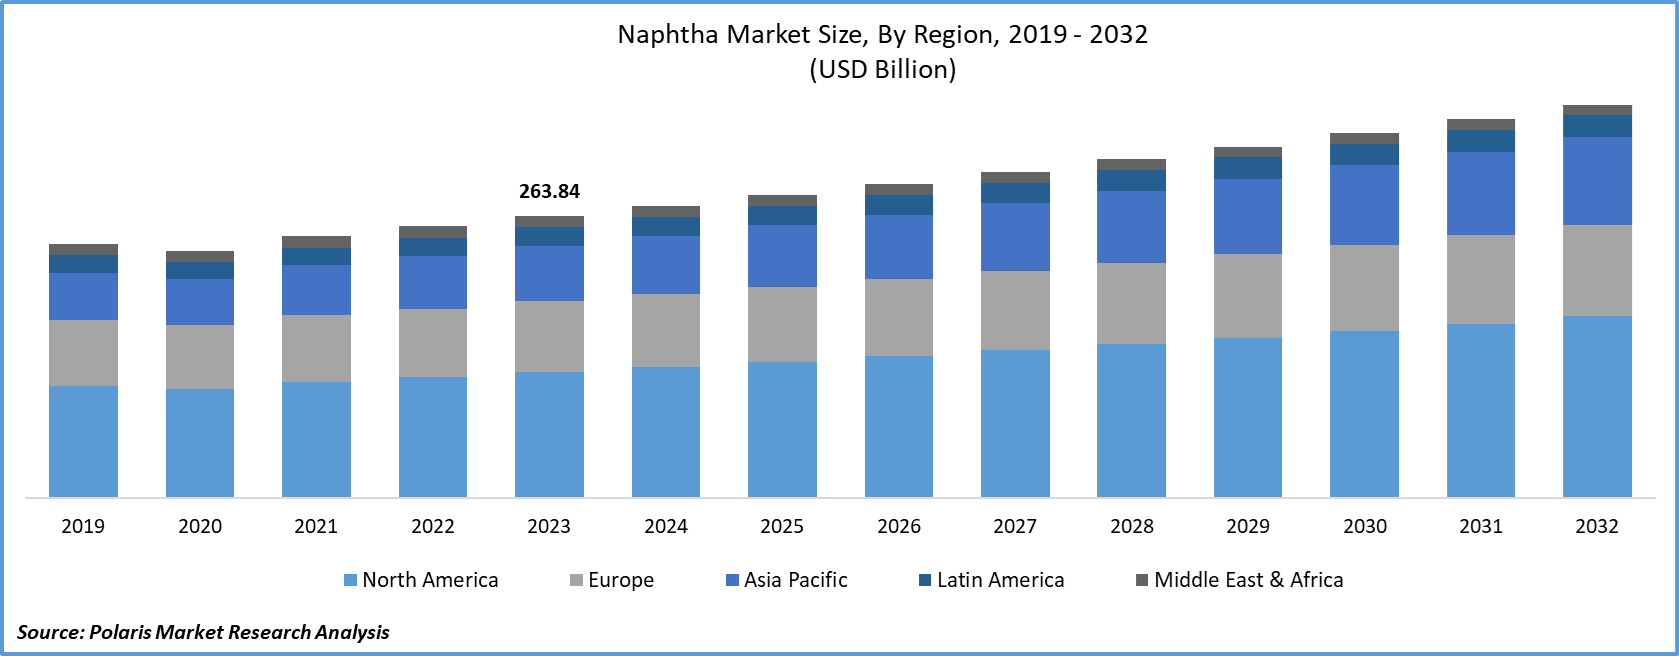 Naphtha Market Size